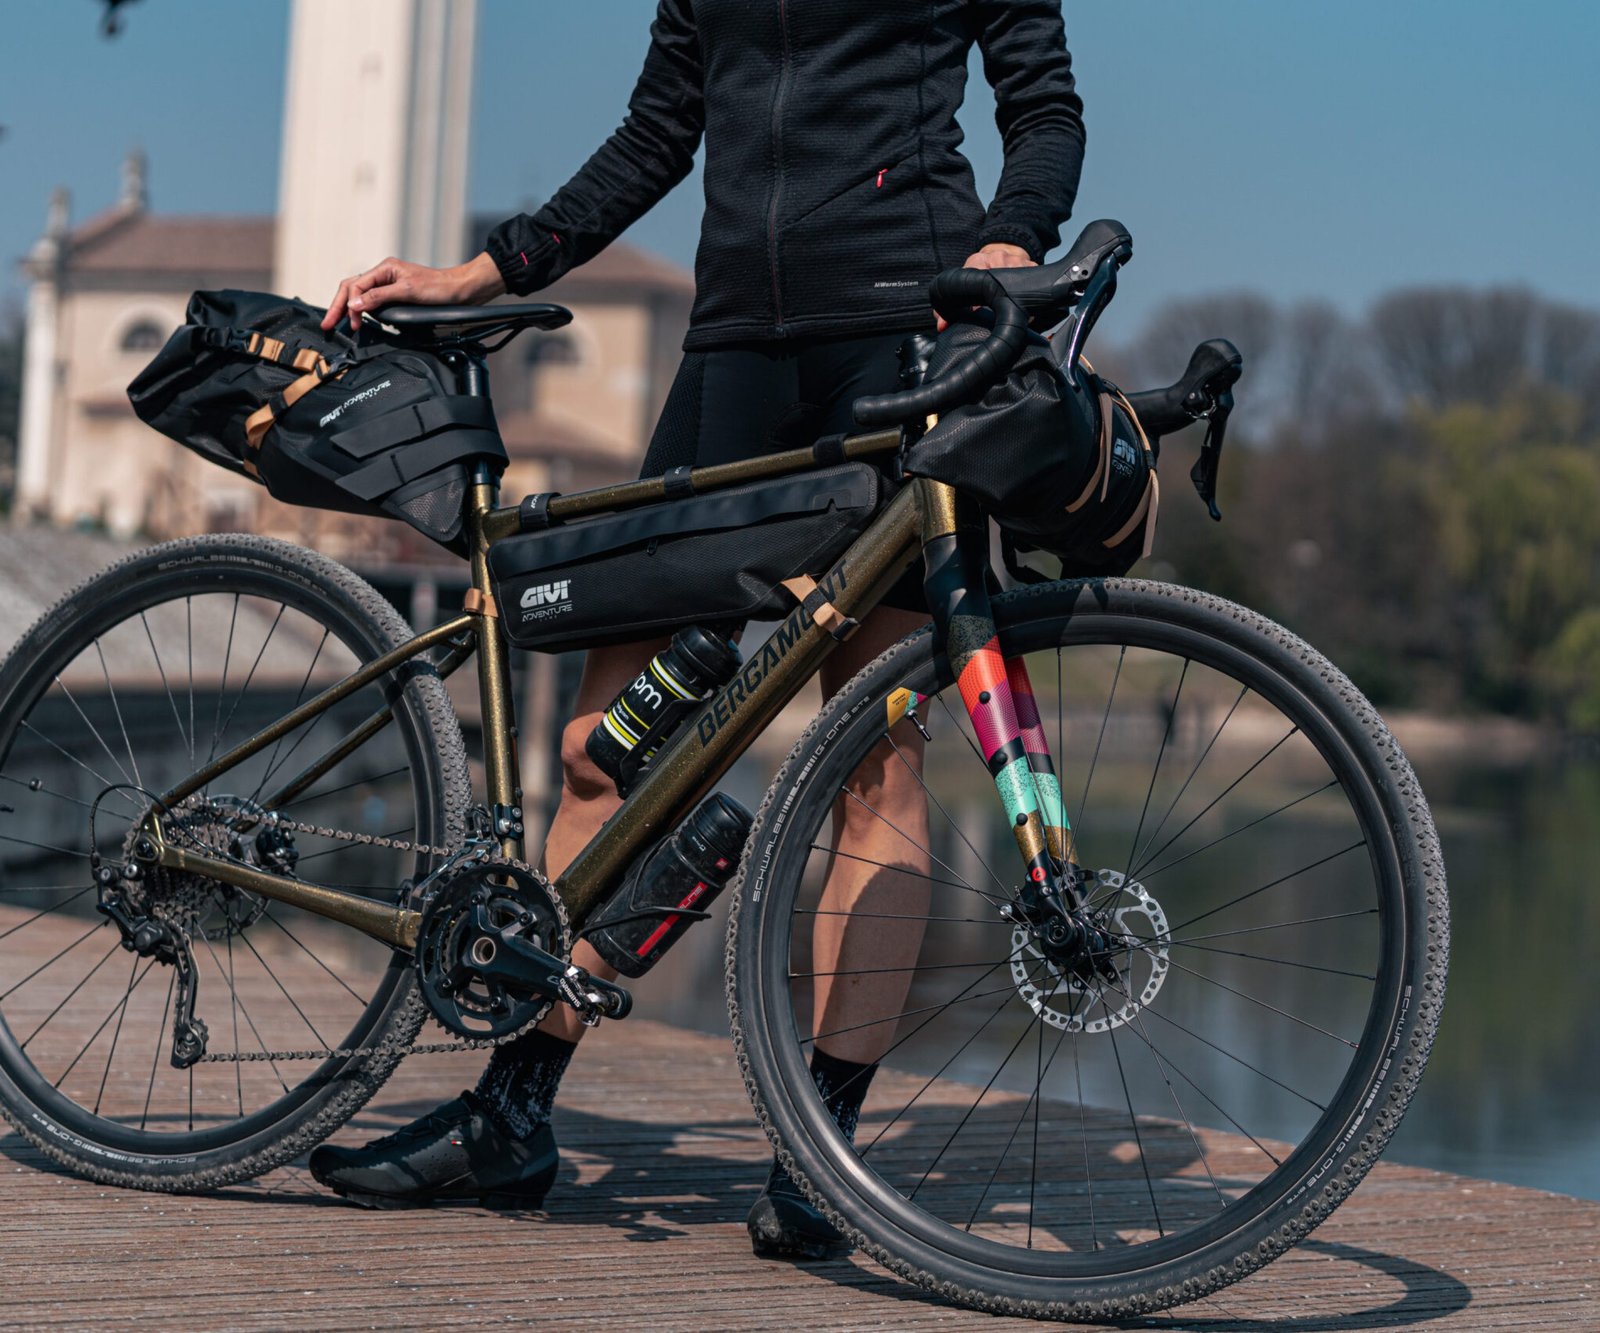 LAVIA | GIVI BIKE HUMP, borsa da sottosella termosaldata e impermeabile, ideale per bikepacking e cicloturismo